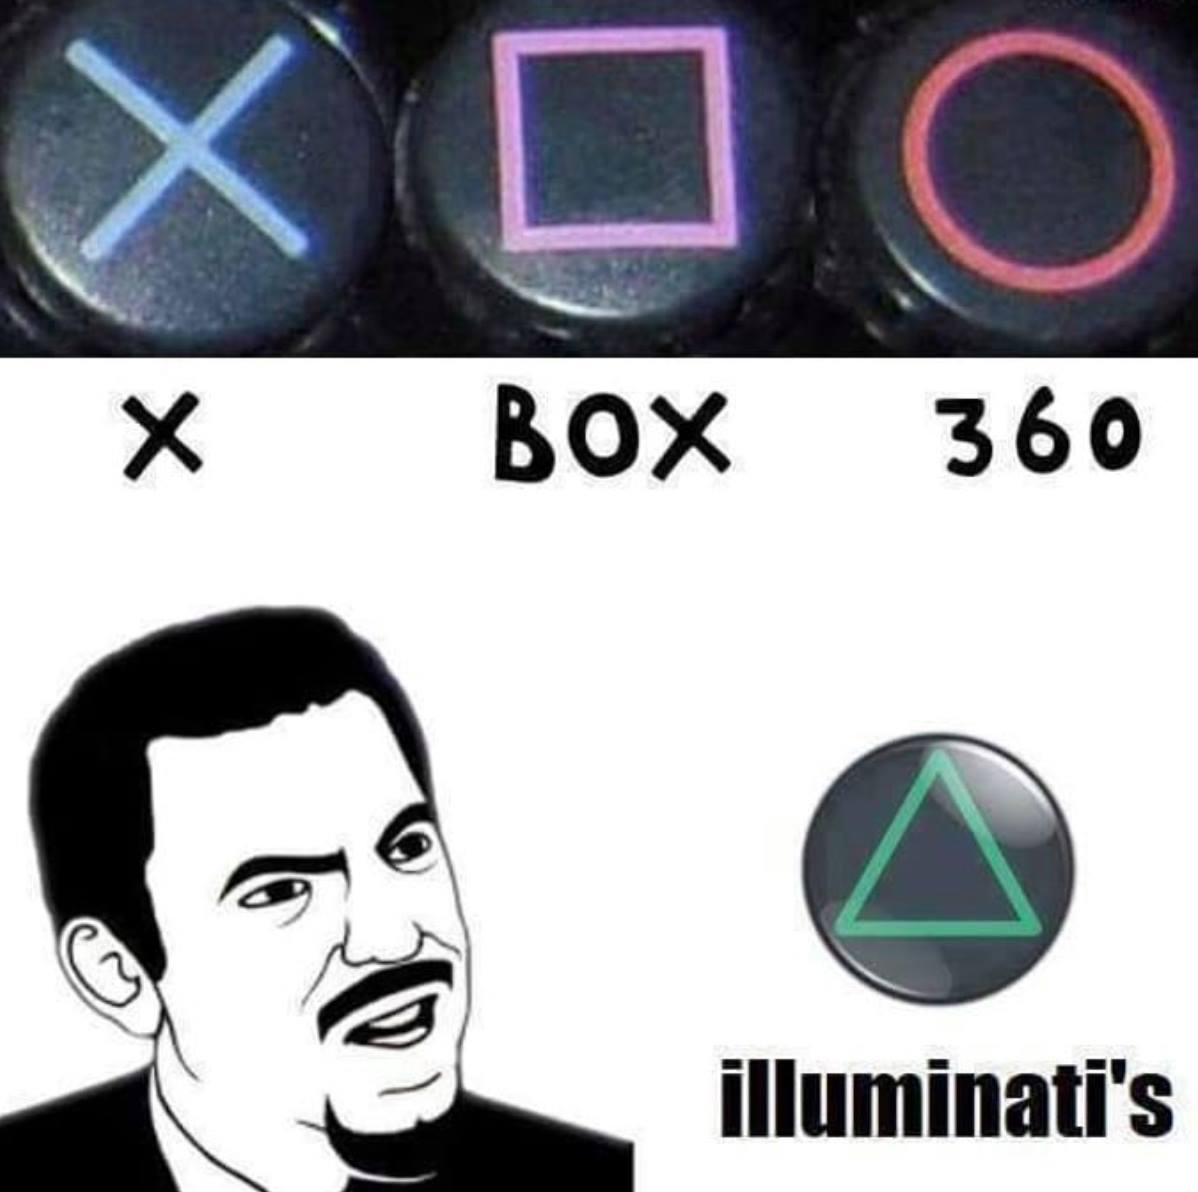 funny video game memes - x Box 360 illuminati's